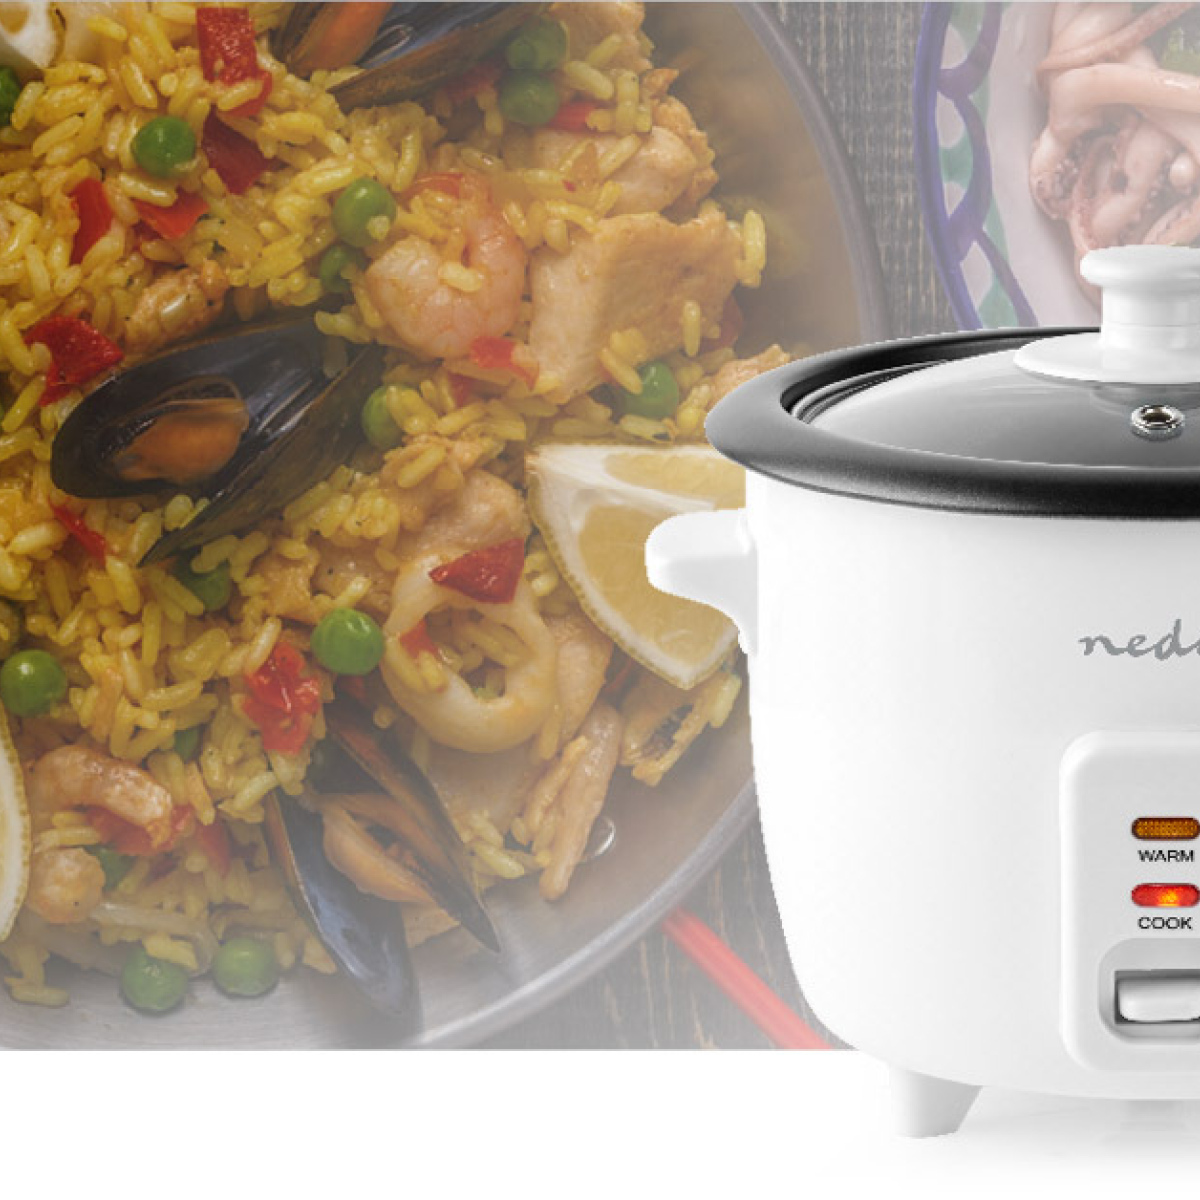 300W, rice cooker, 0.6 lt, alluminium steamer, non-stick coating, removable bowl, Nedis